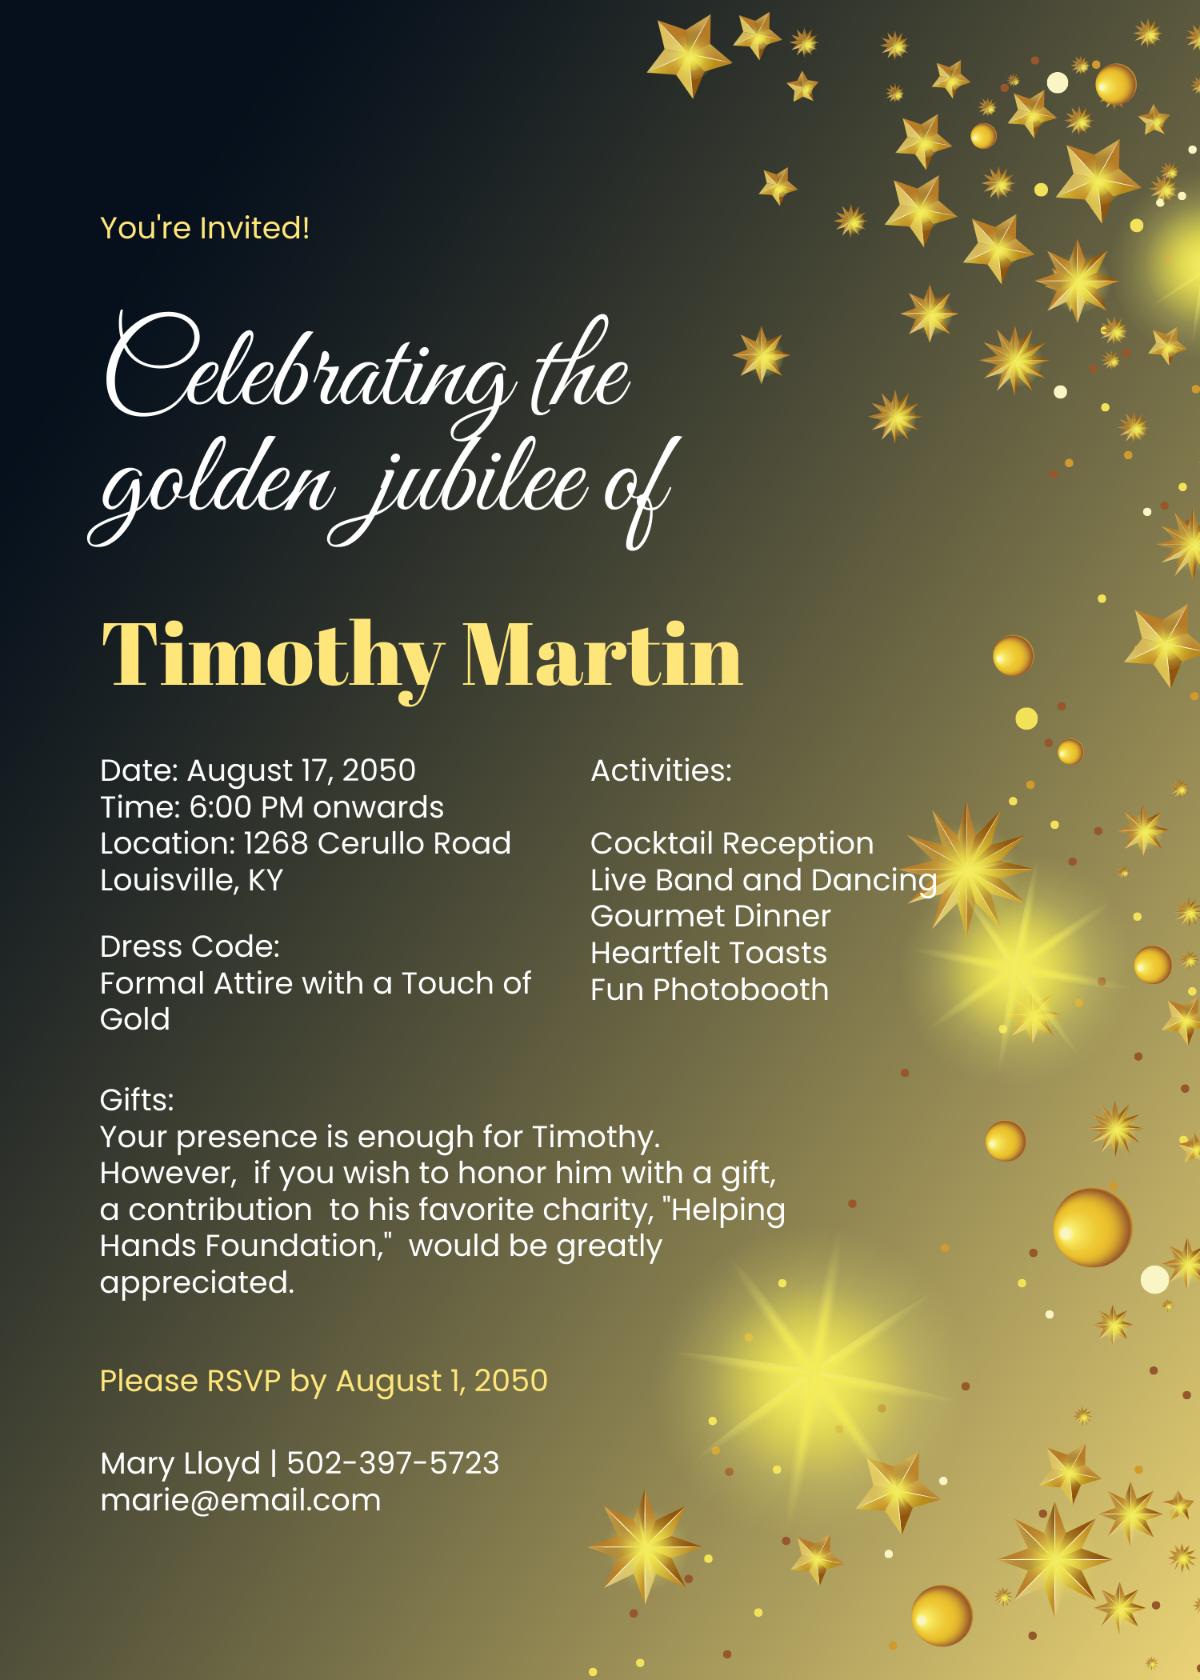 50th Birthday Invitation With Golden Stars